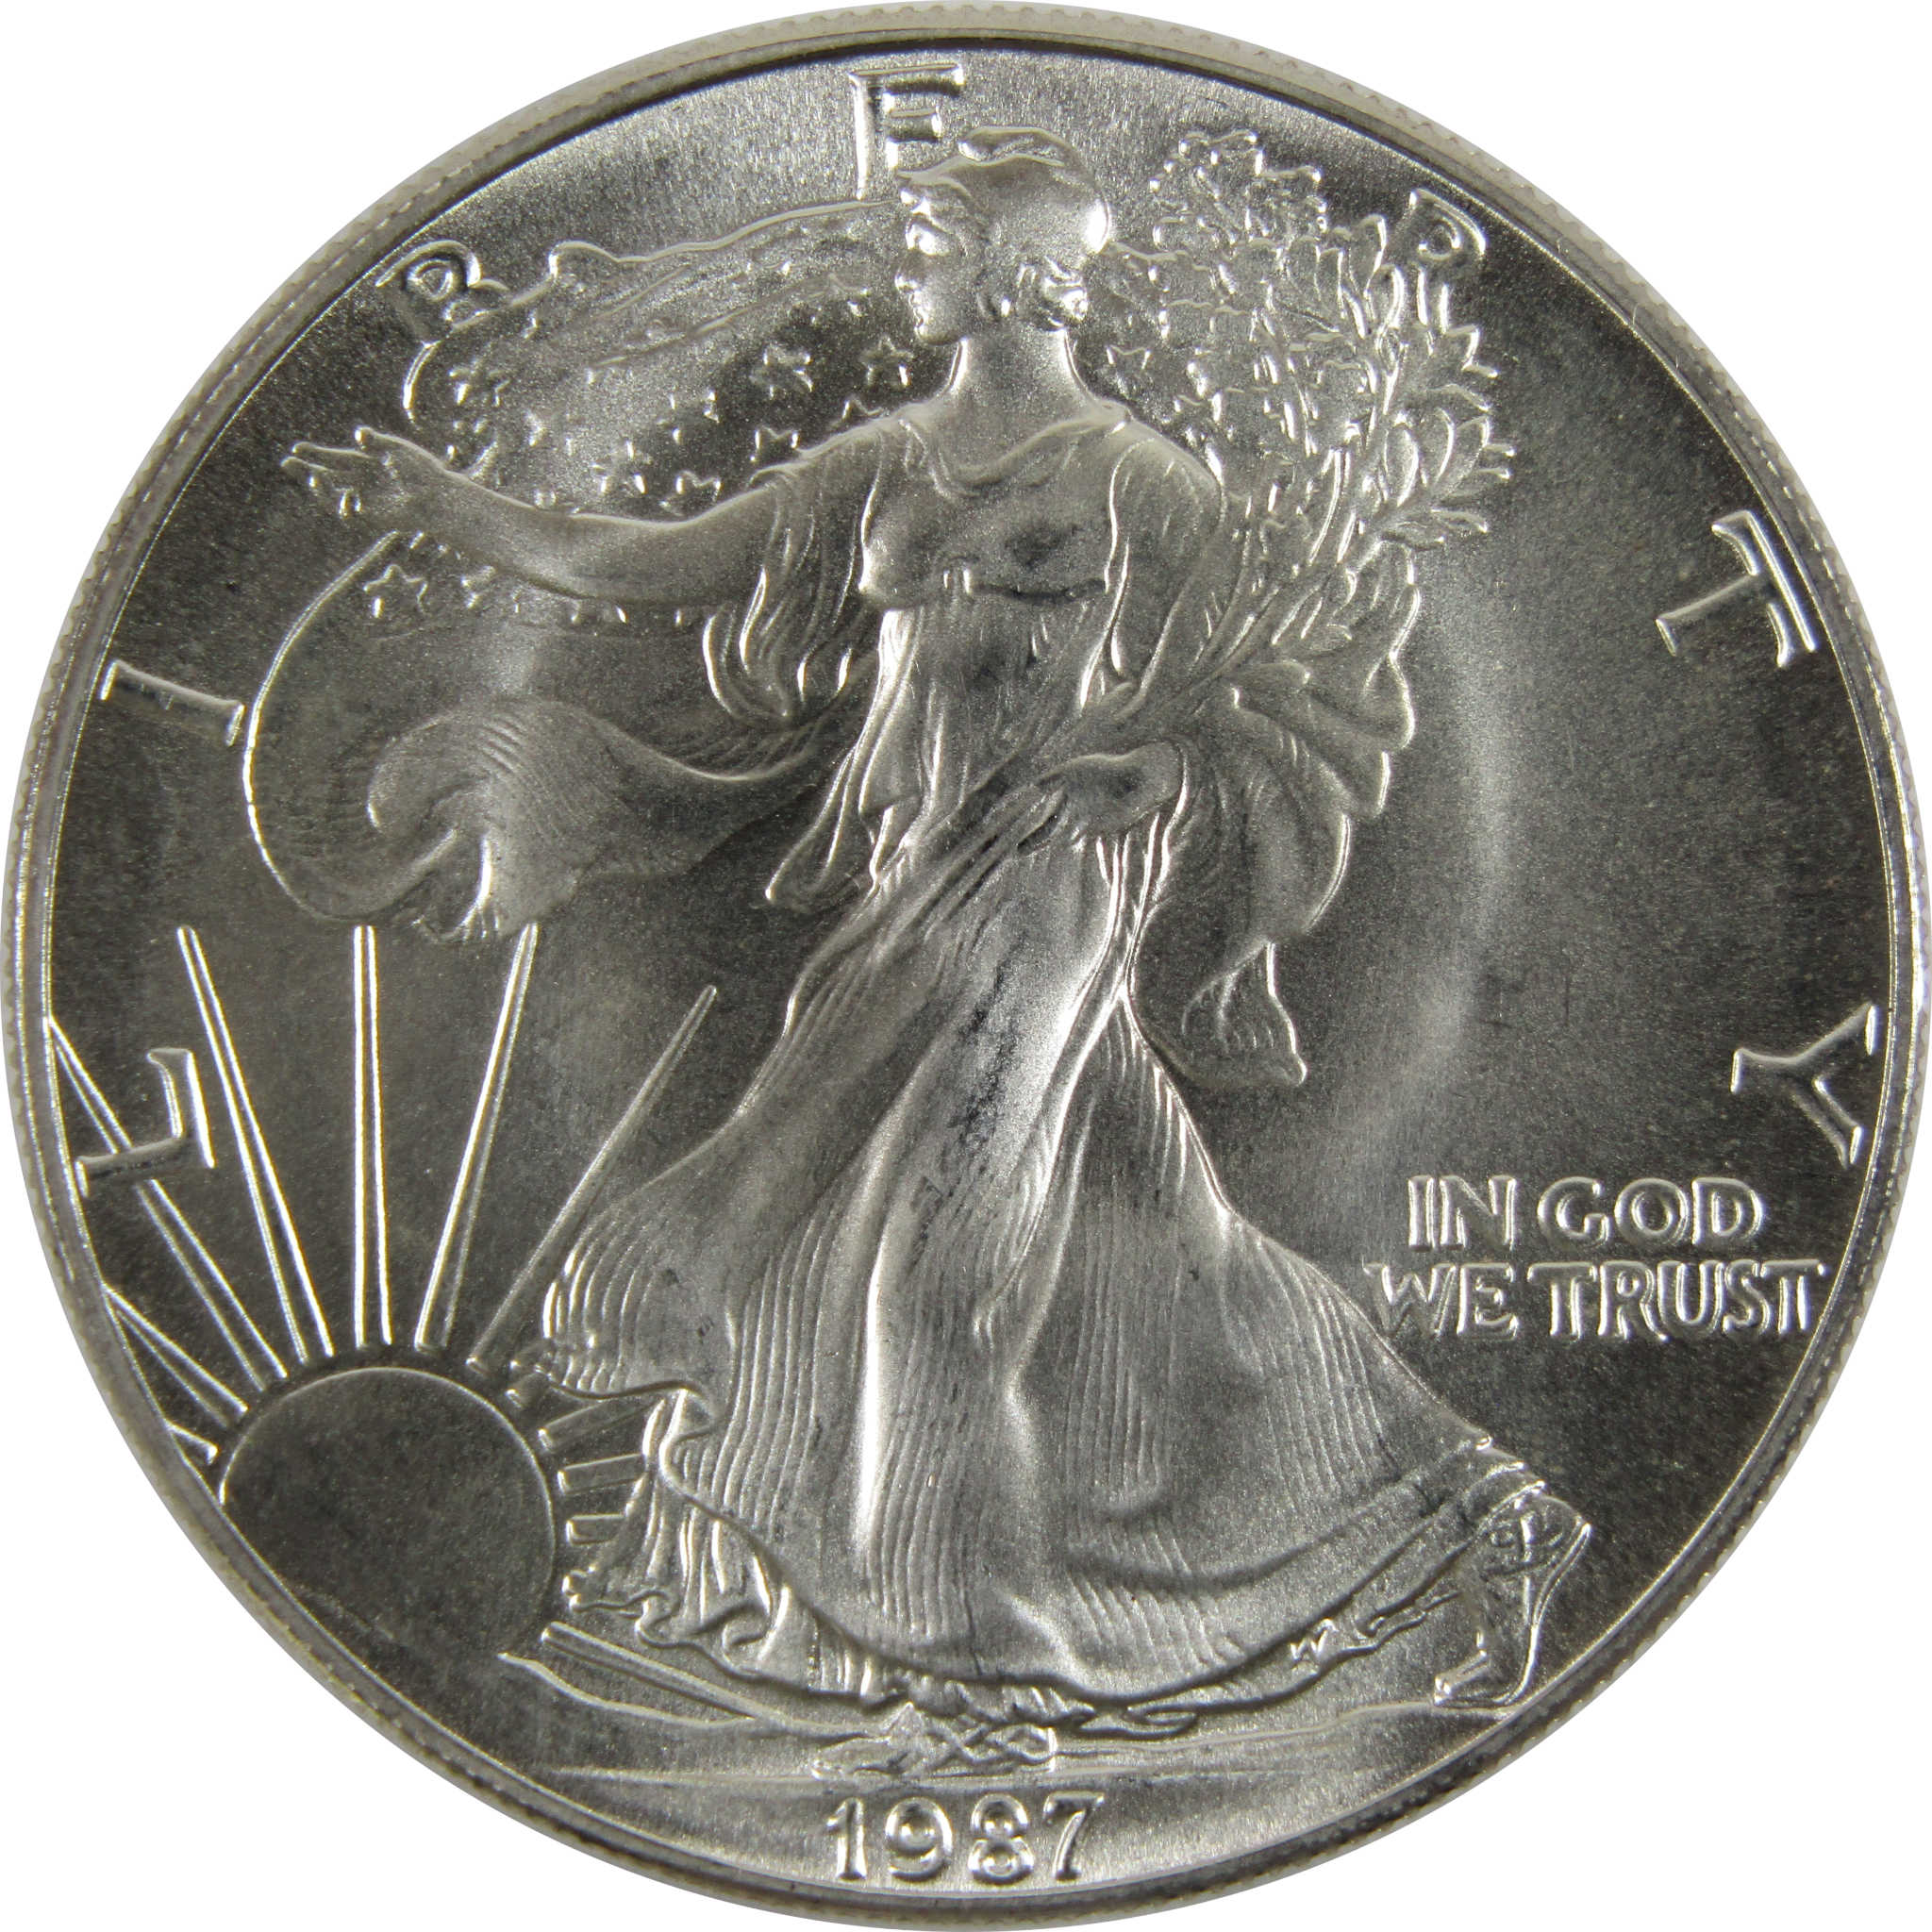 Buy Silver Bullion Coins - Profile Coins & Collectibles